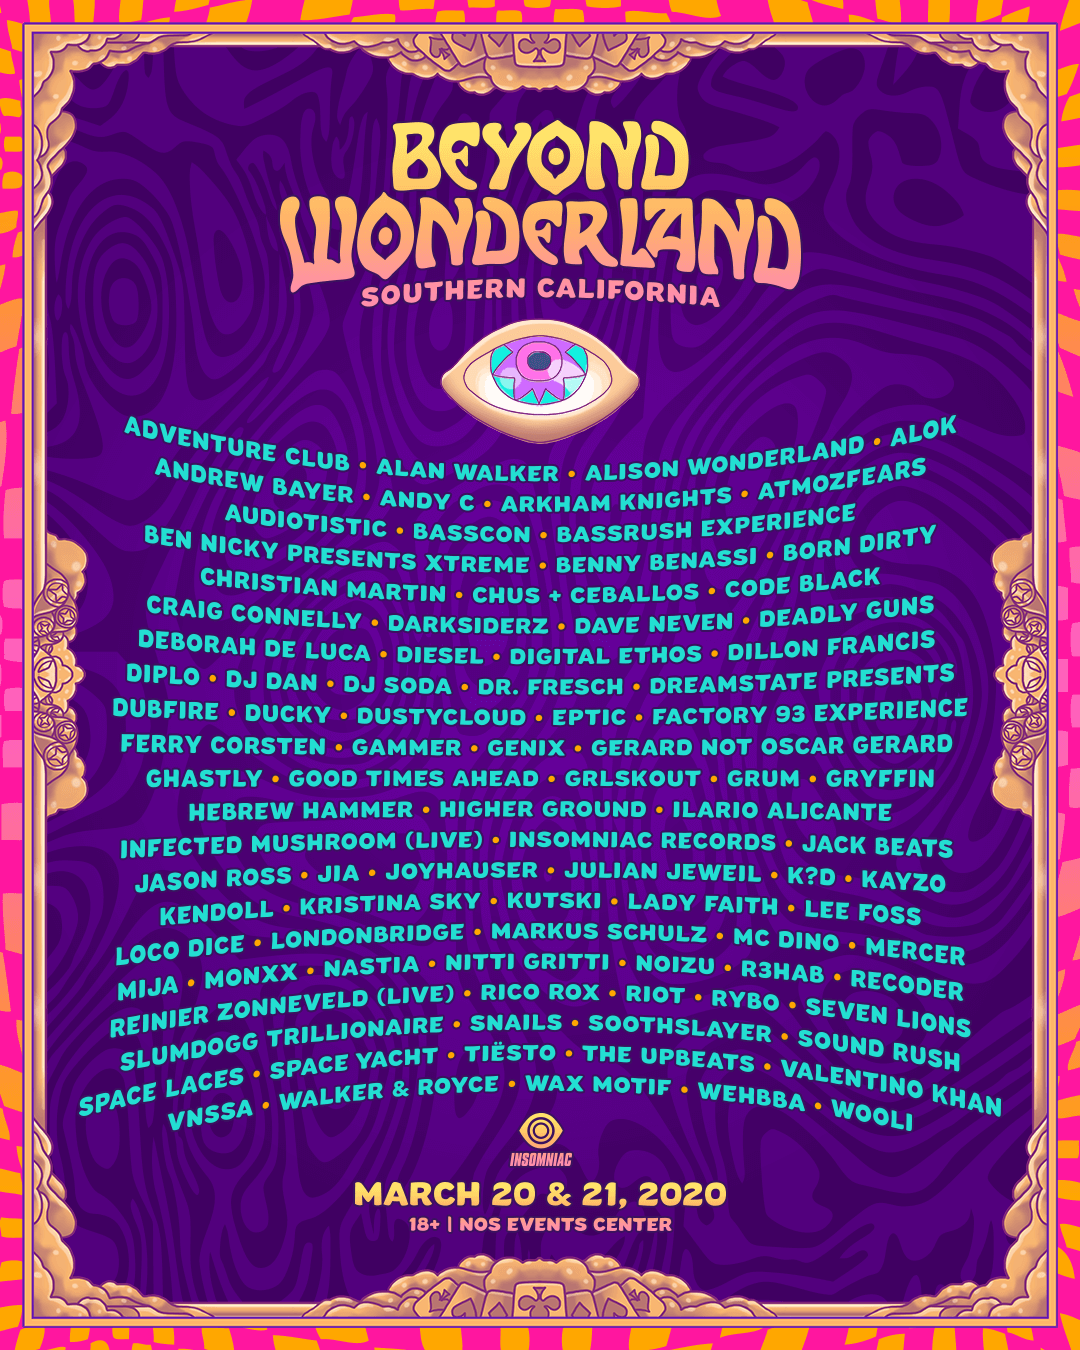 Beyond Wonderland SoCal 2020 lineup